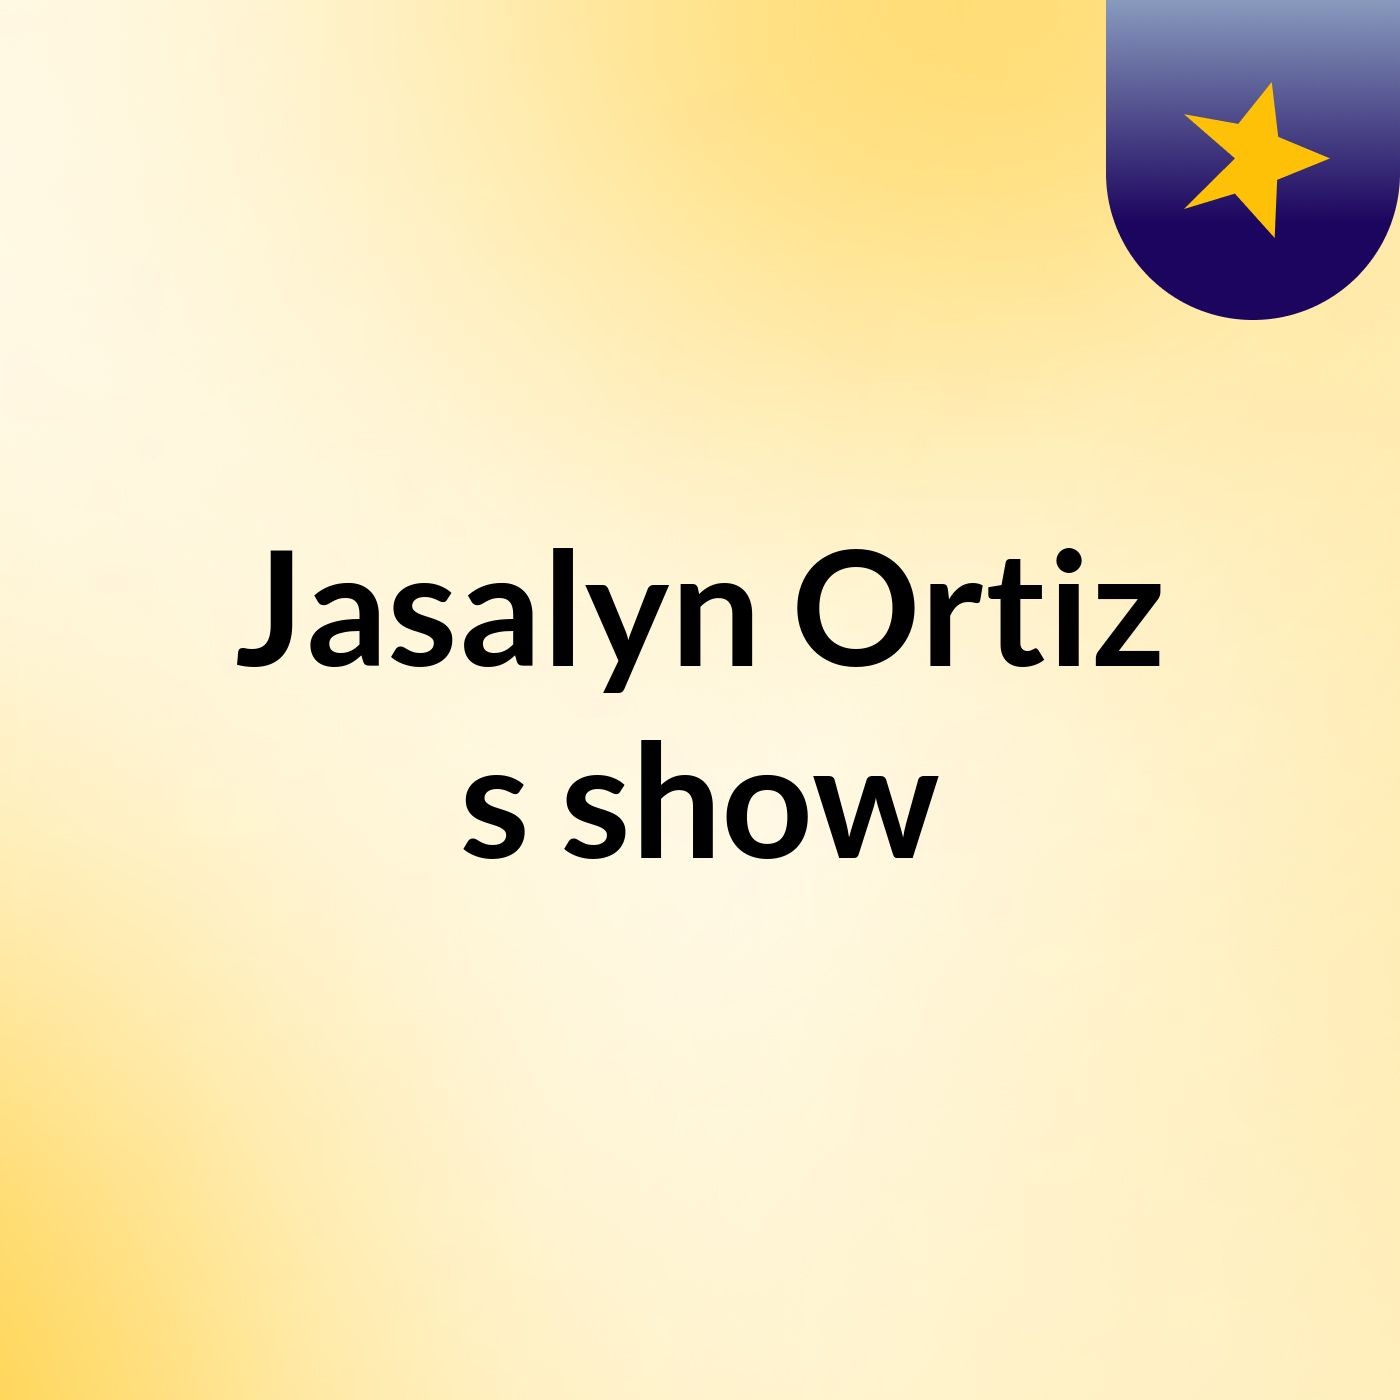 Jasalyn Ortiz's show